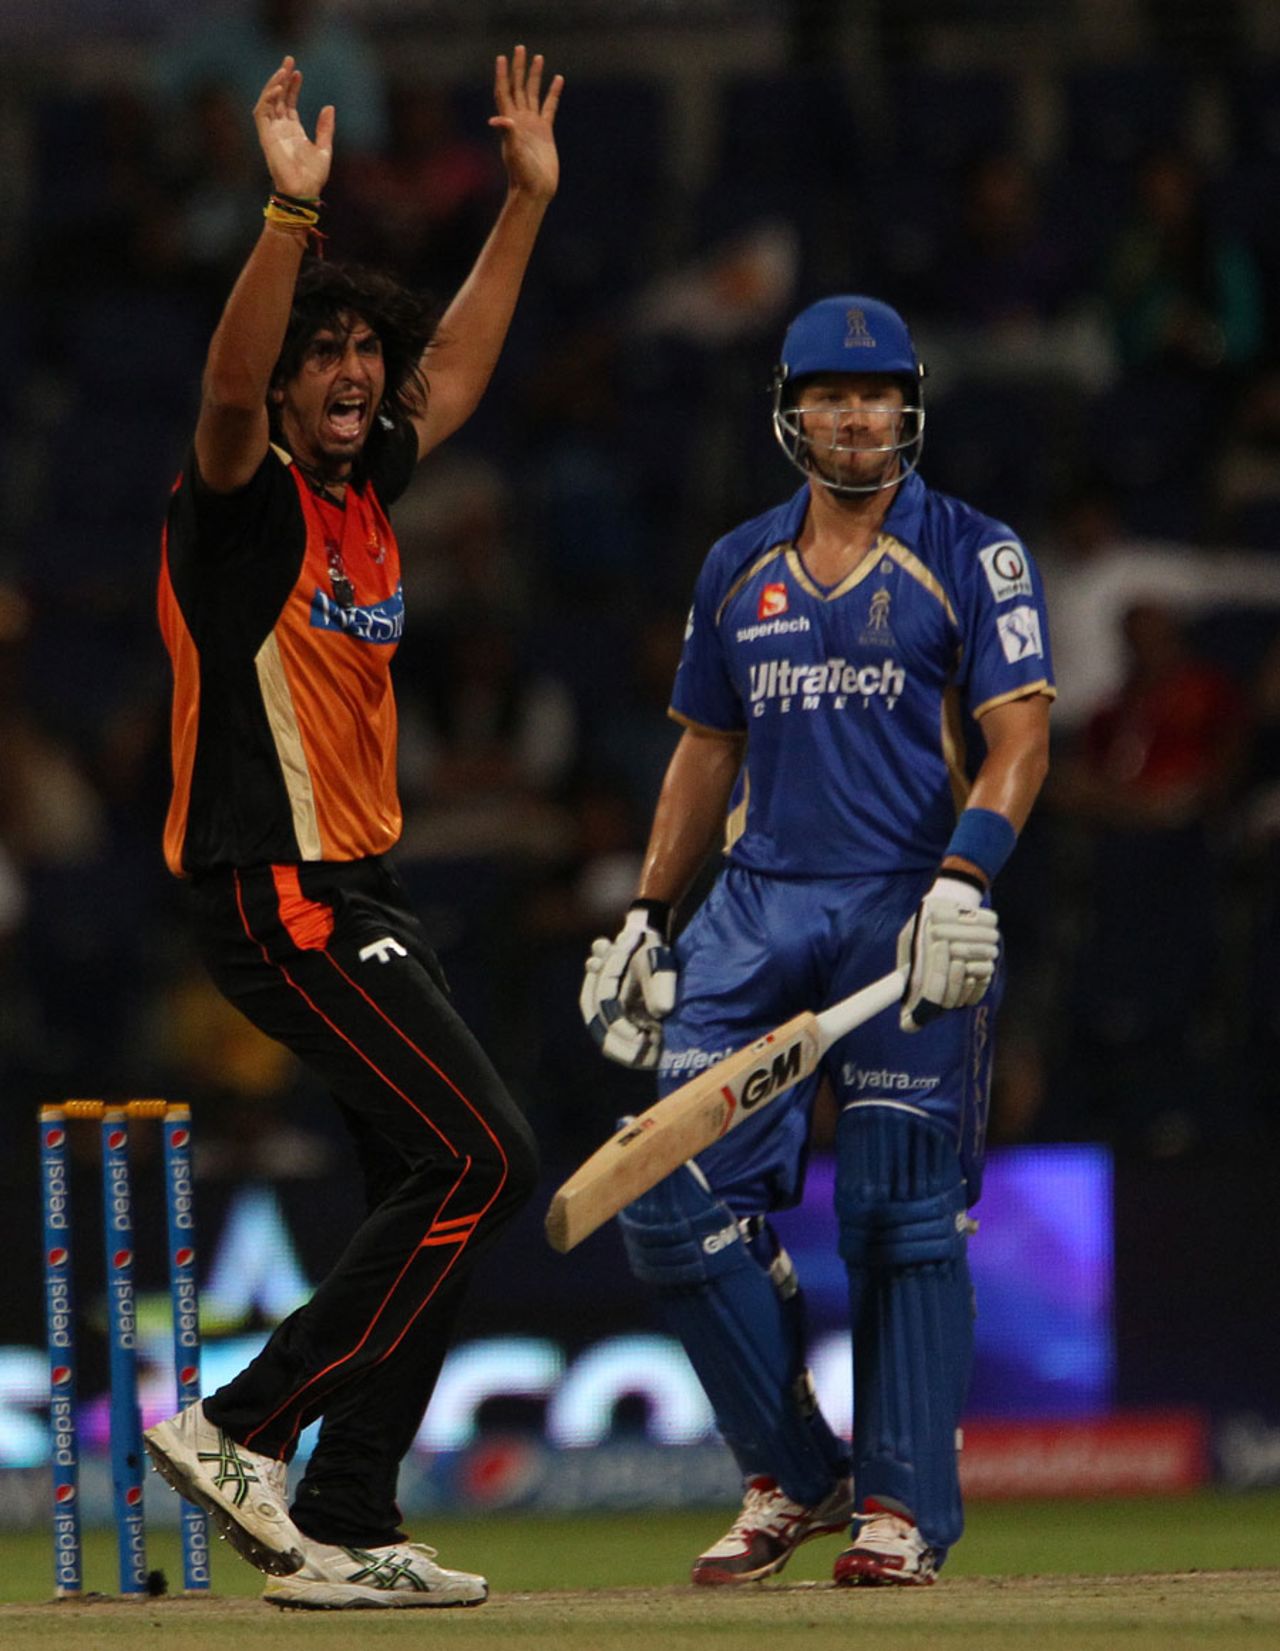 Ishant Sharma removed Shane Watson with a ripper, Sunrisers Hyderabad v Rajasthan Royals, IPL 2014, Abu Dhabi, April 18, 2014